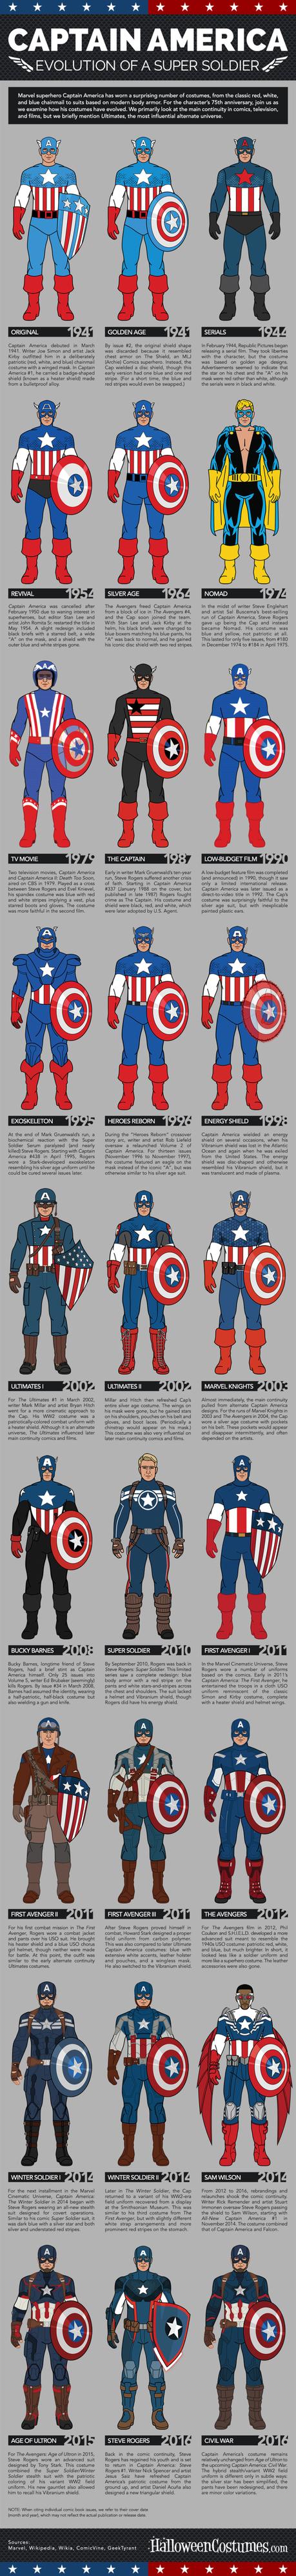 Captain-America-Costumes-Infographic